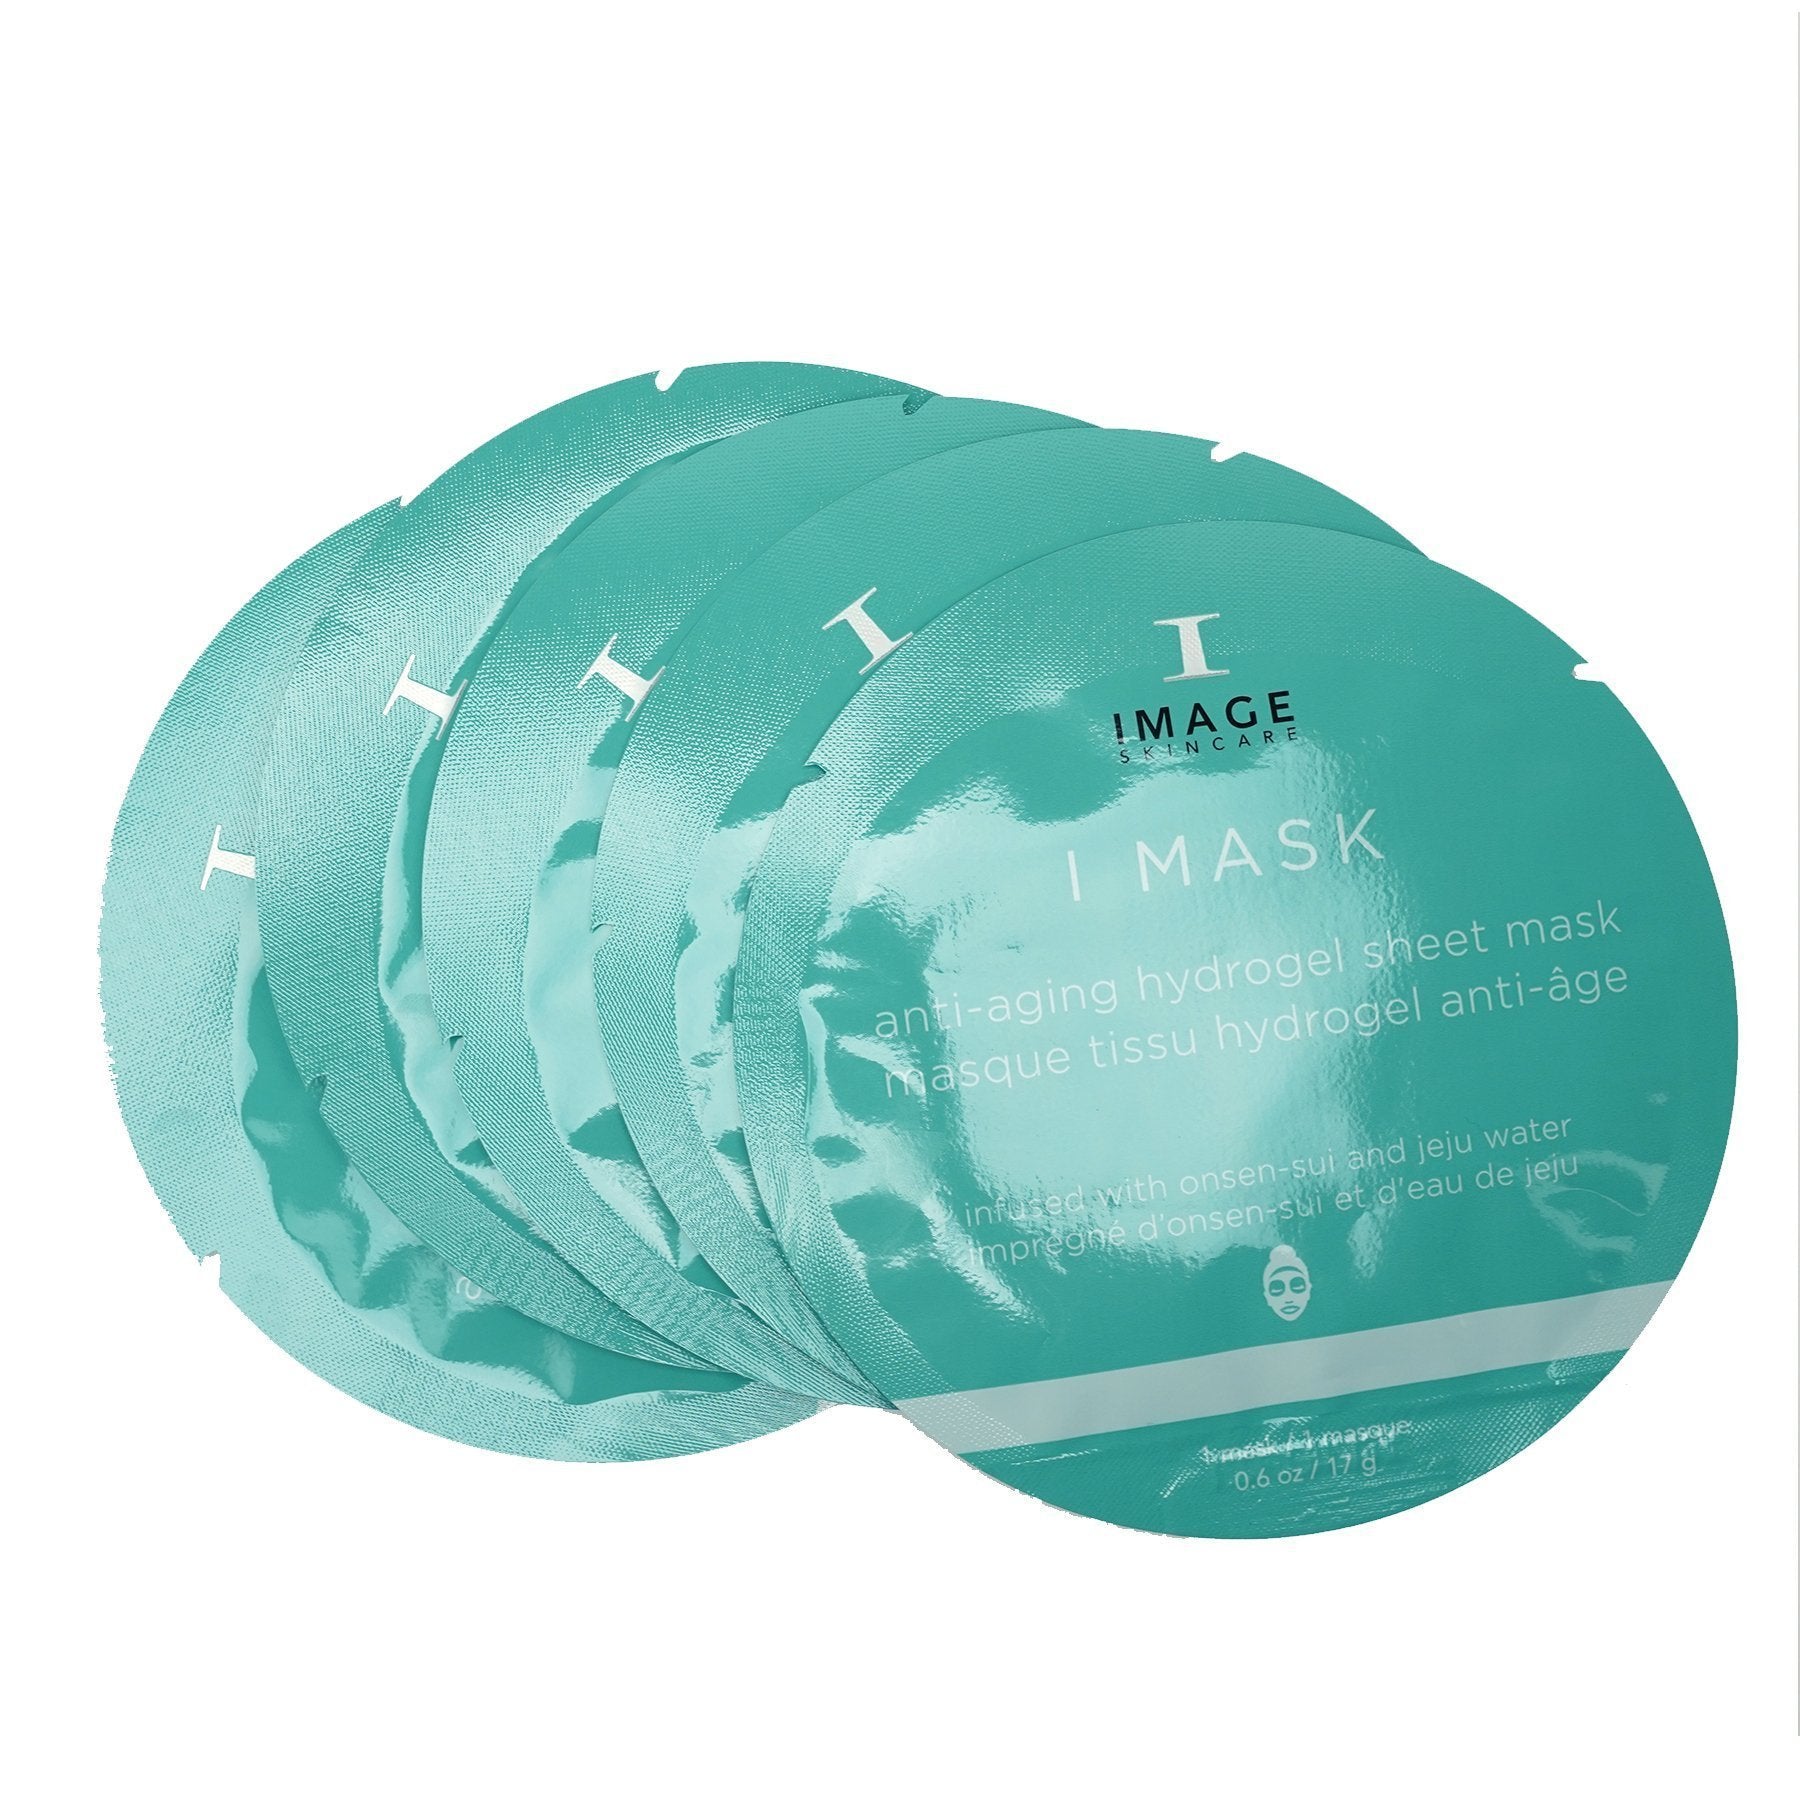 RETAIL - I MASK anti-aging hydrogel sheet mask - 5 pack - MK-200N